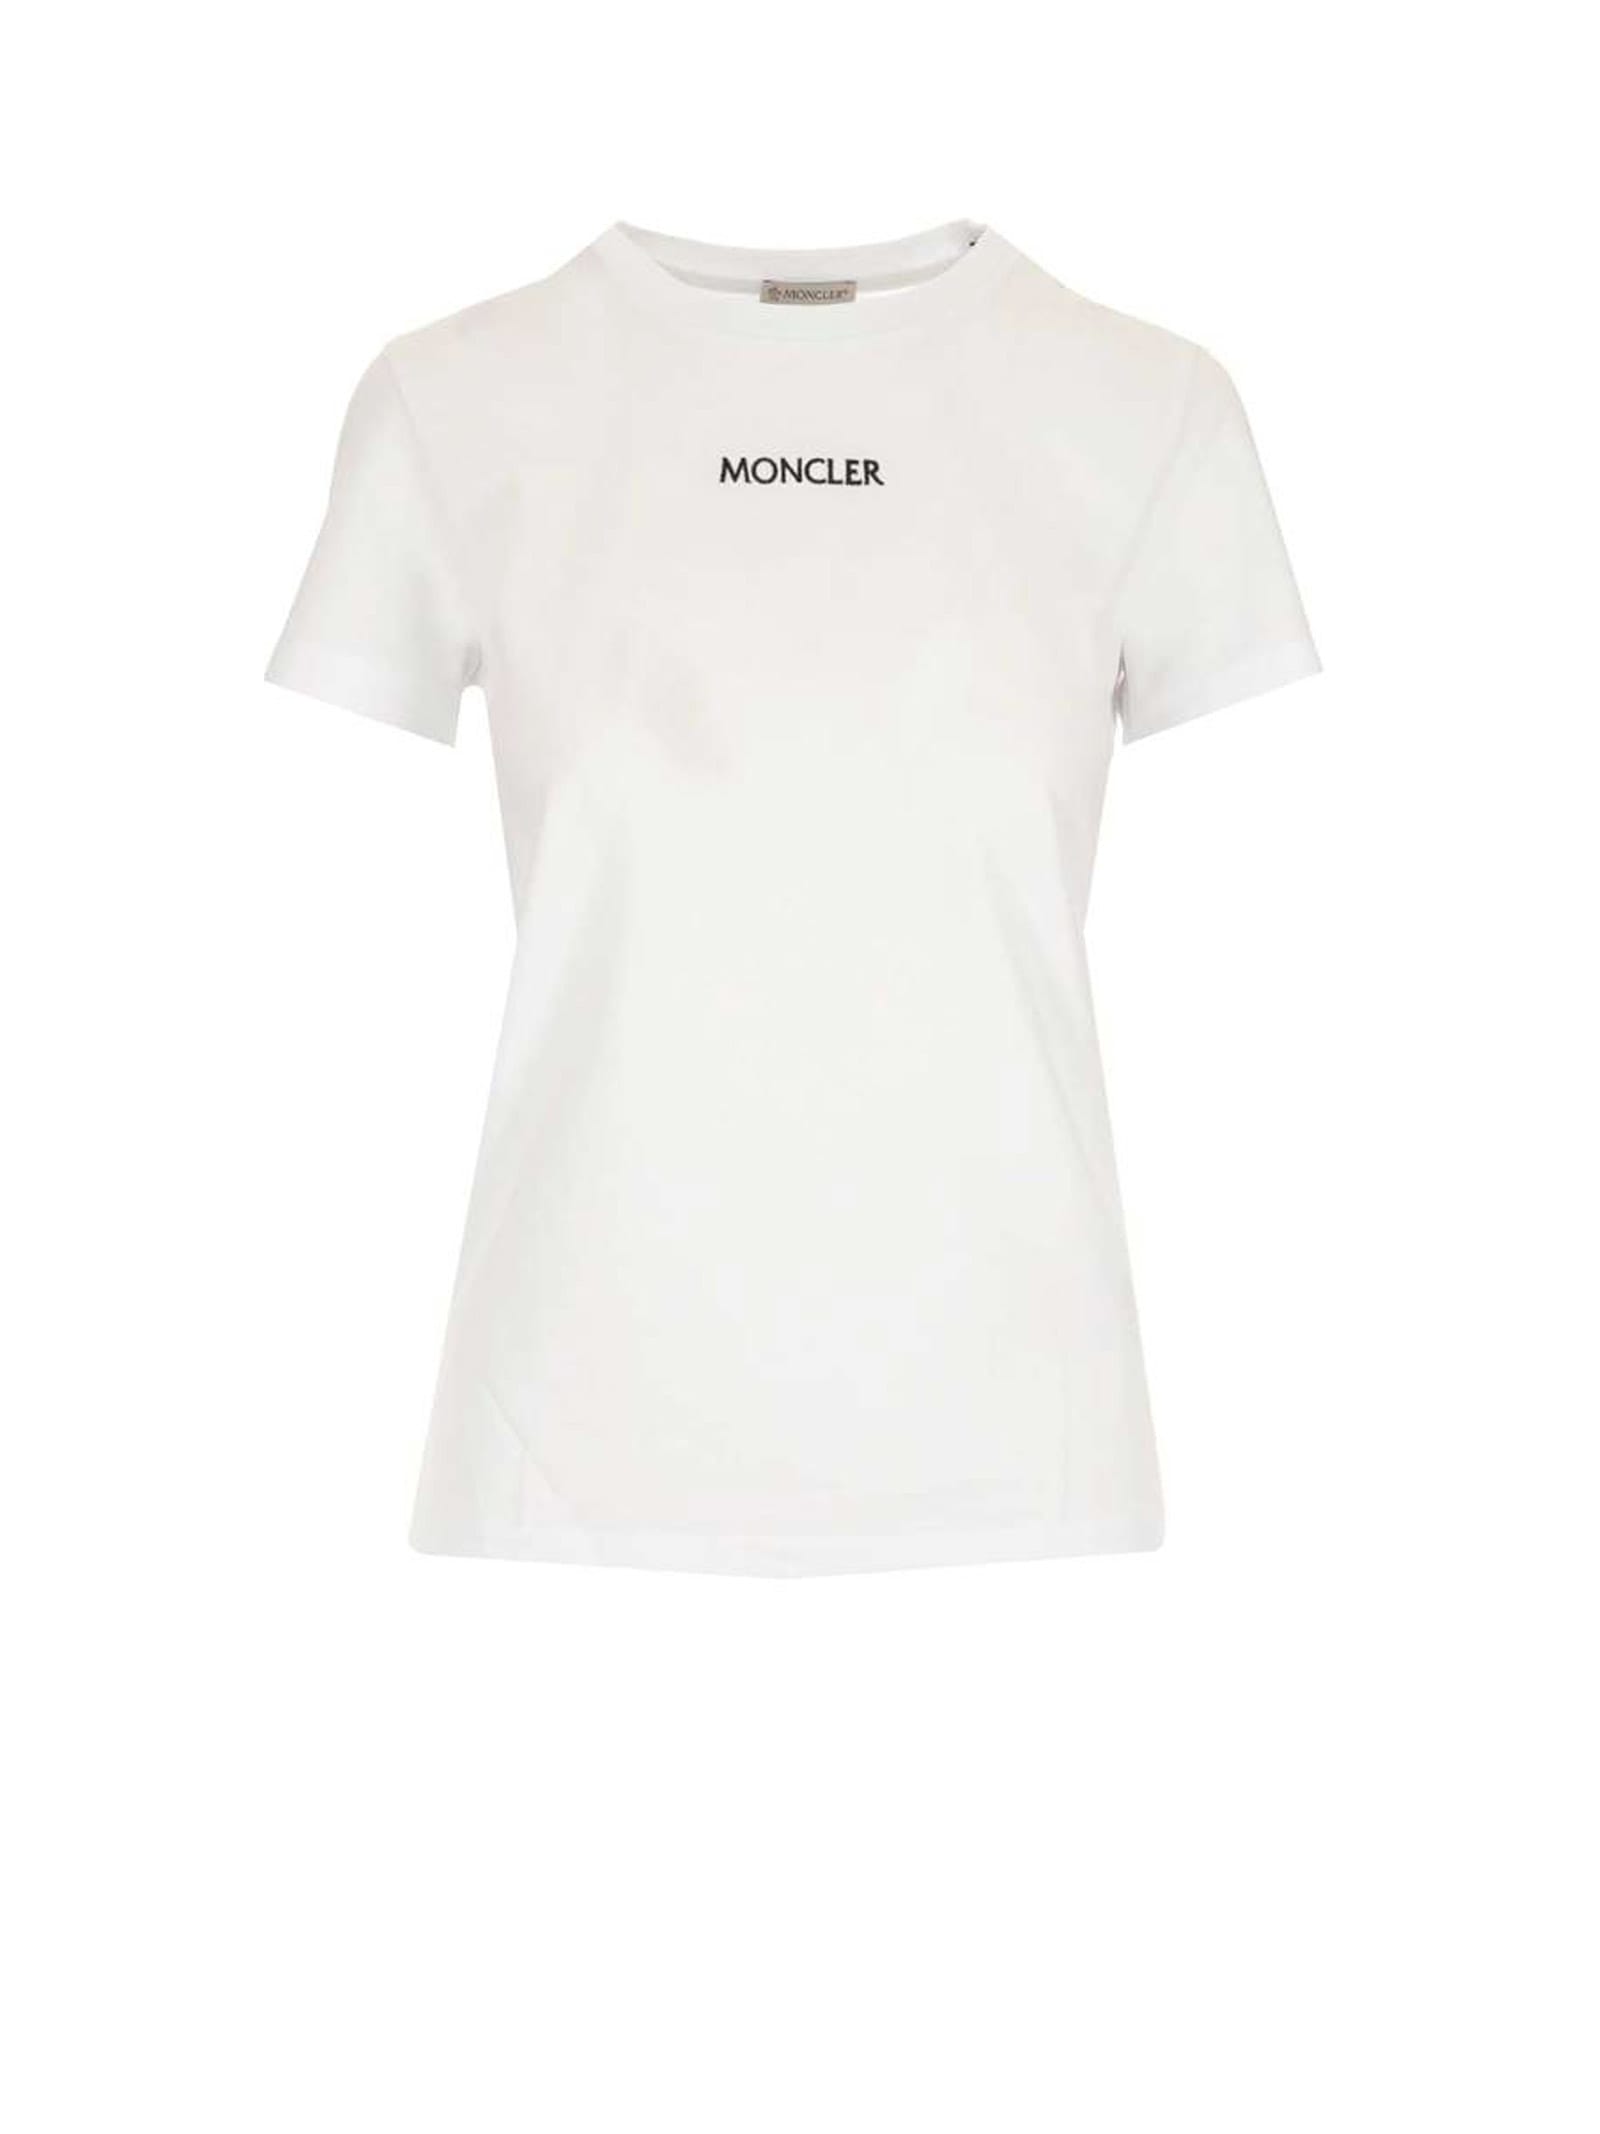 Moncler Moncler White T-shirt